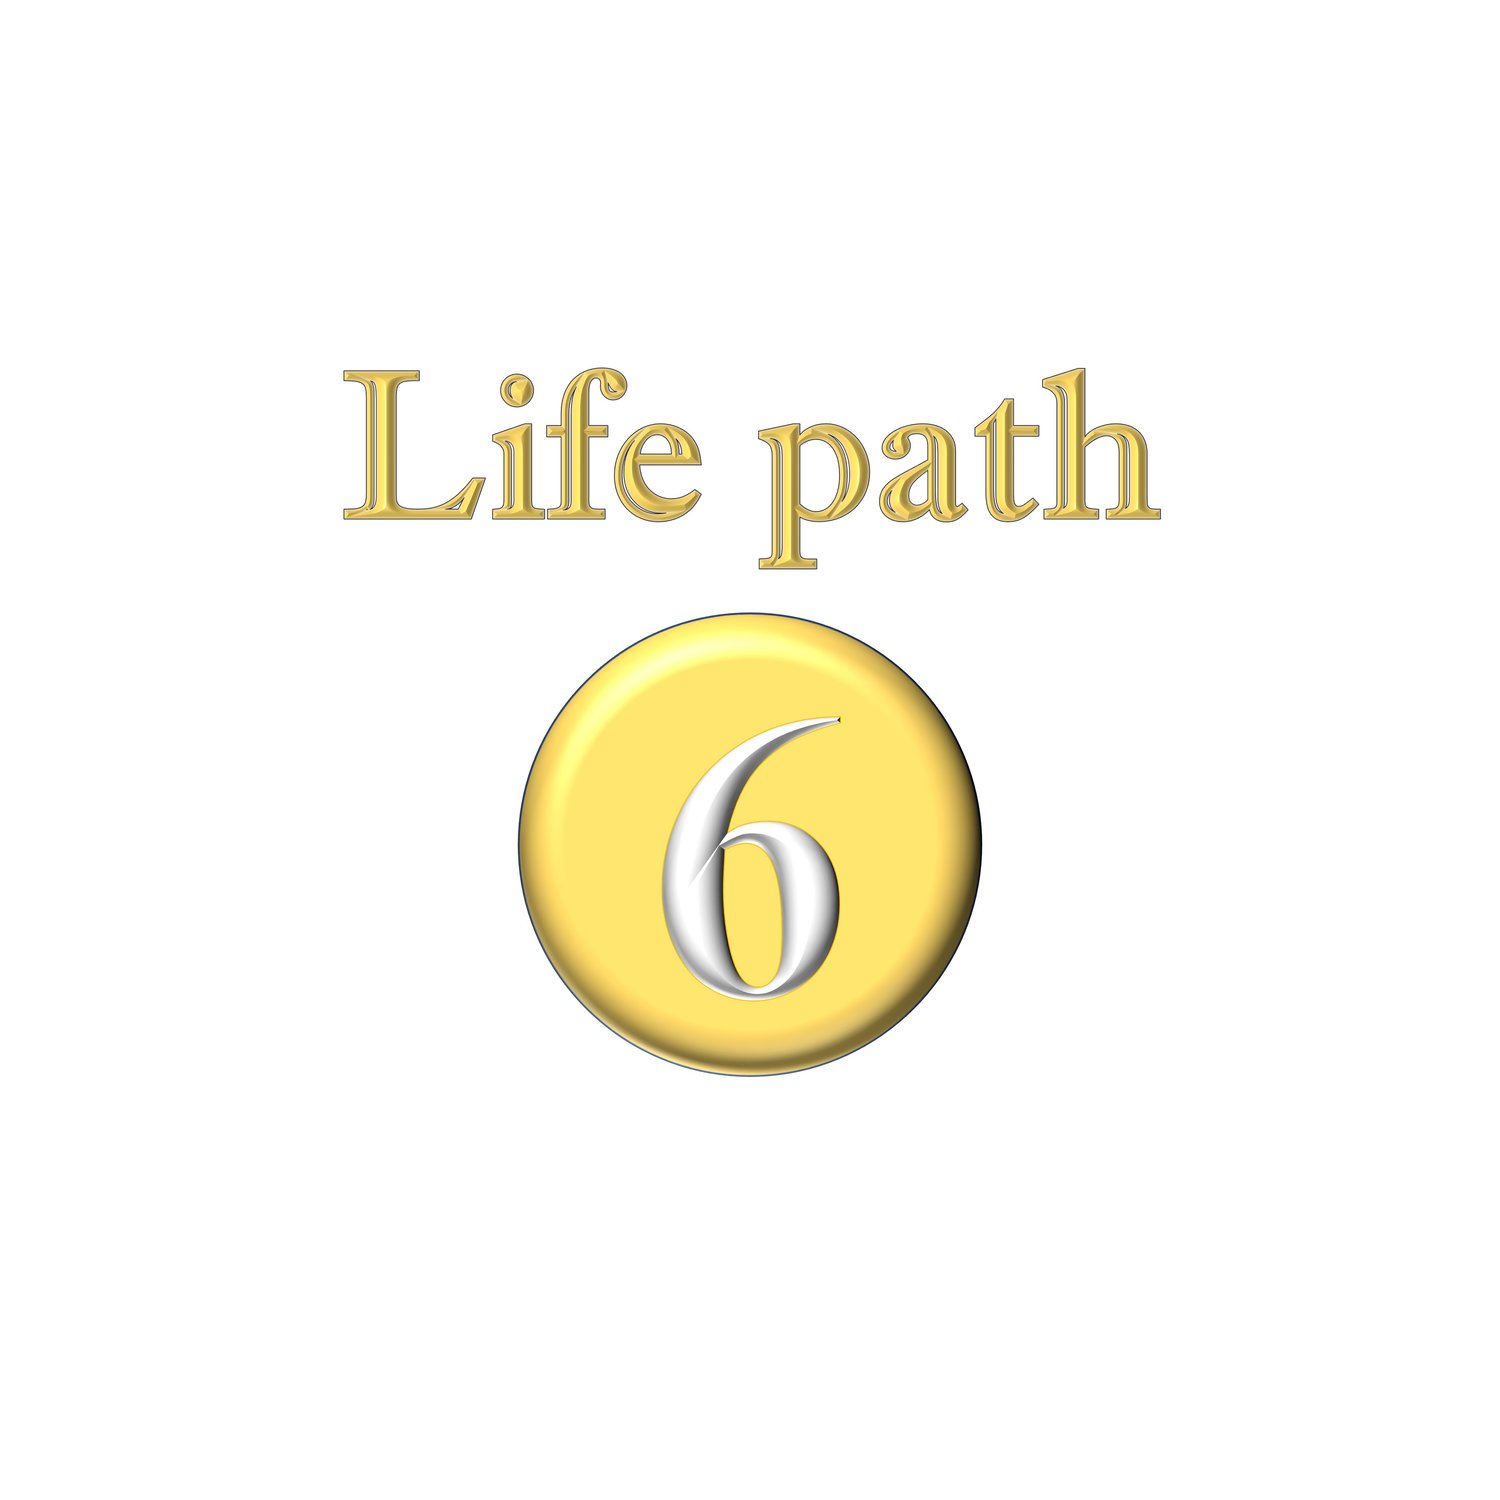 Life path 6